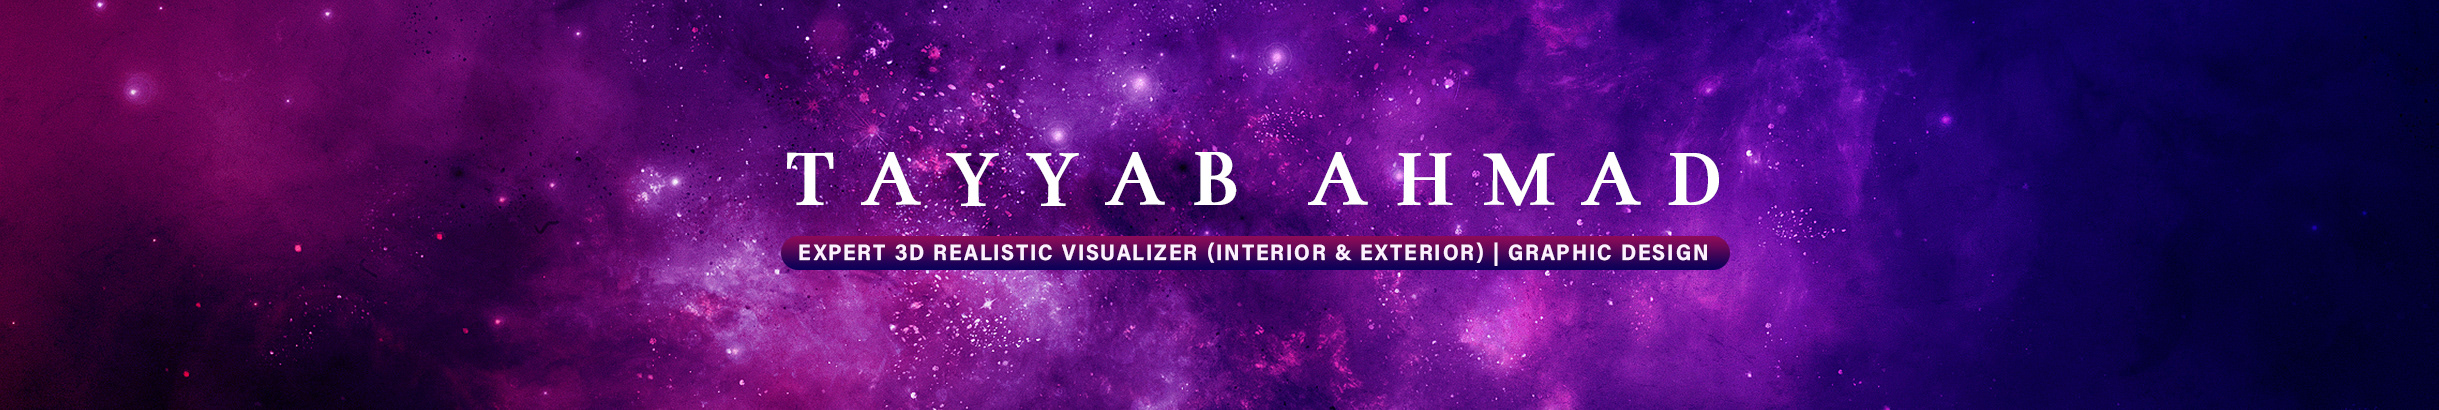 Tayyab Ahmad's profile banner